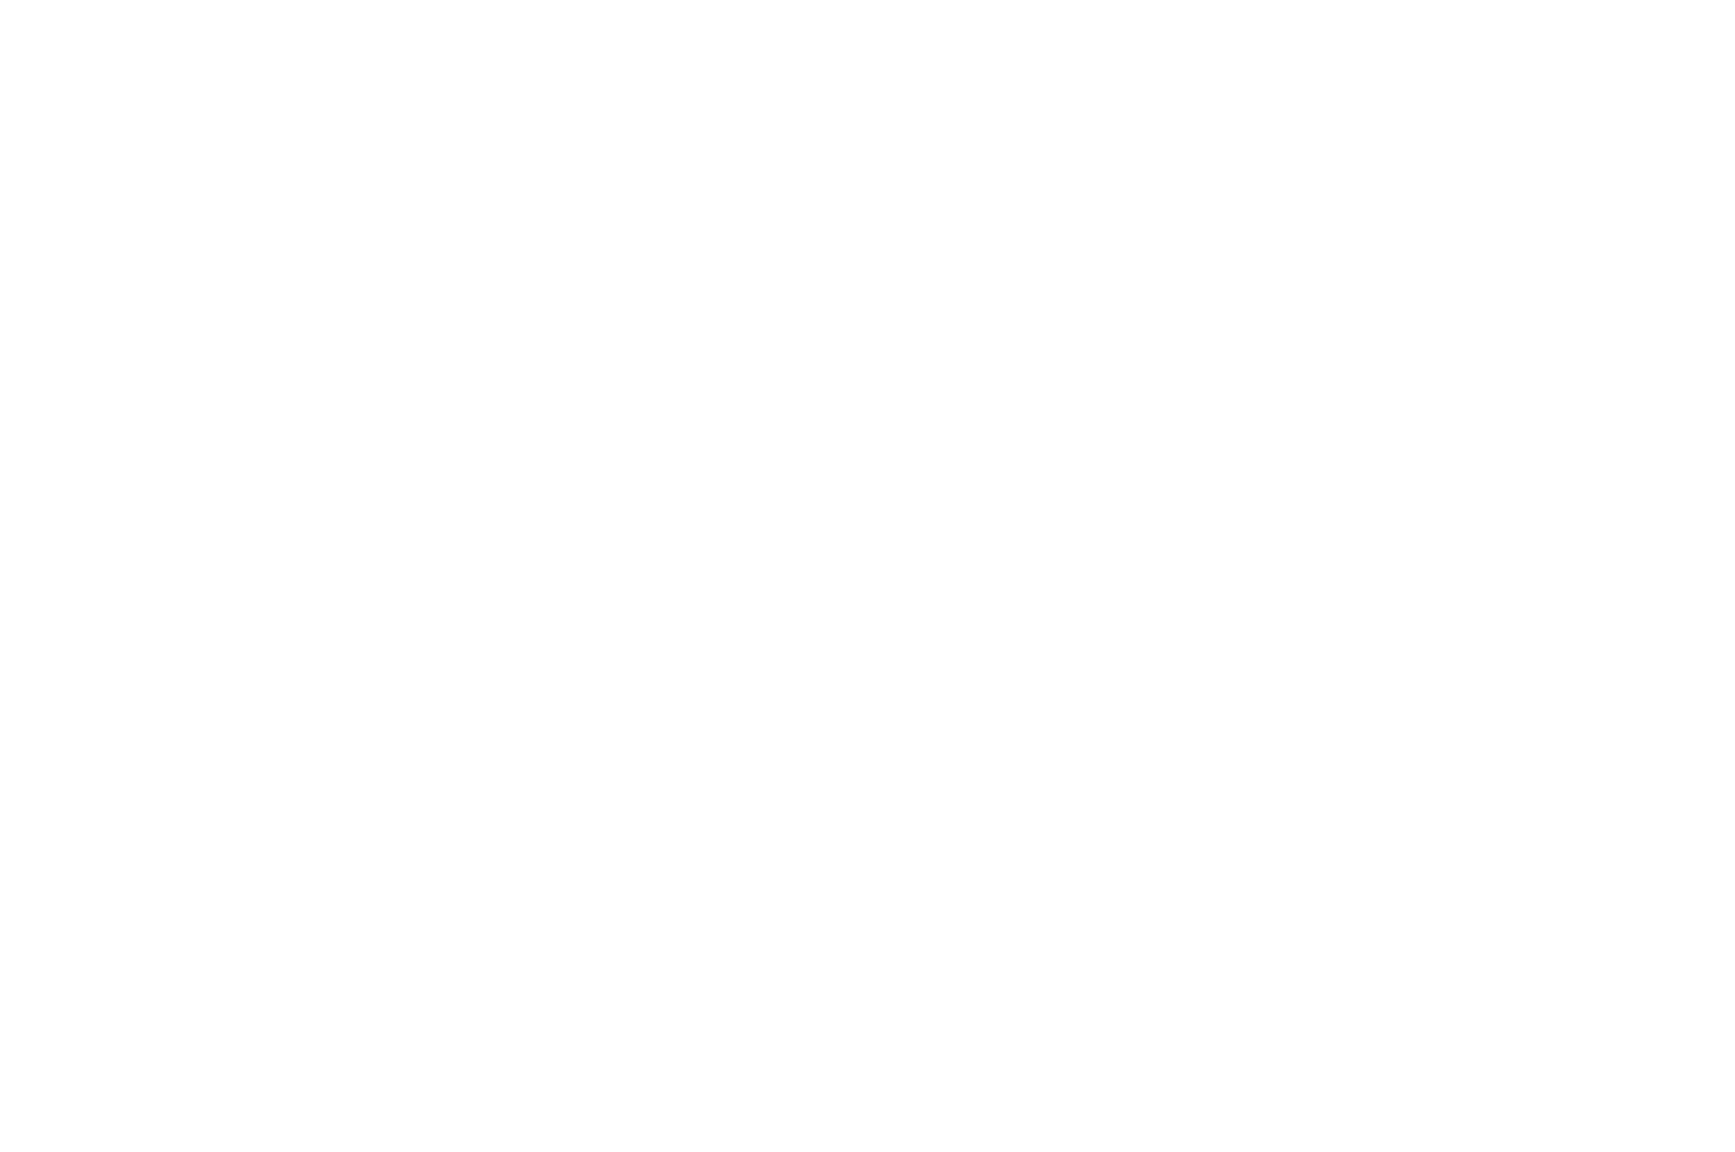 OFFICIAL SELECTION - MKE Short Film Fest - 2022